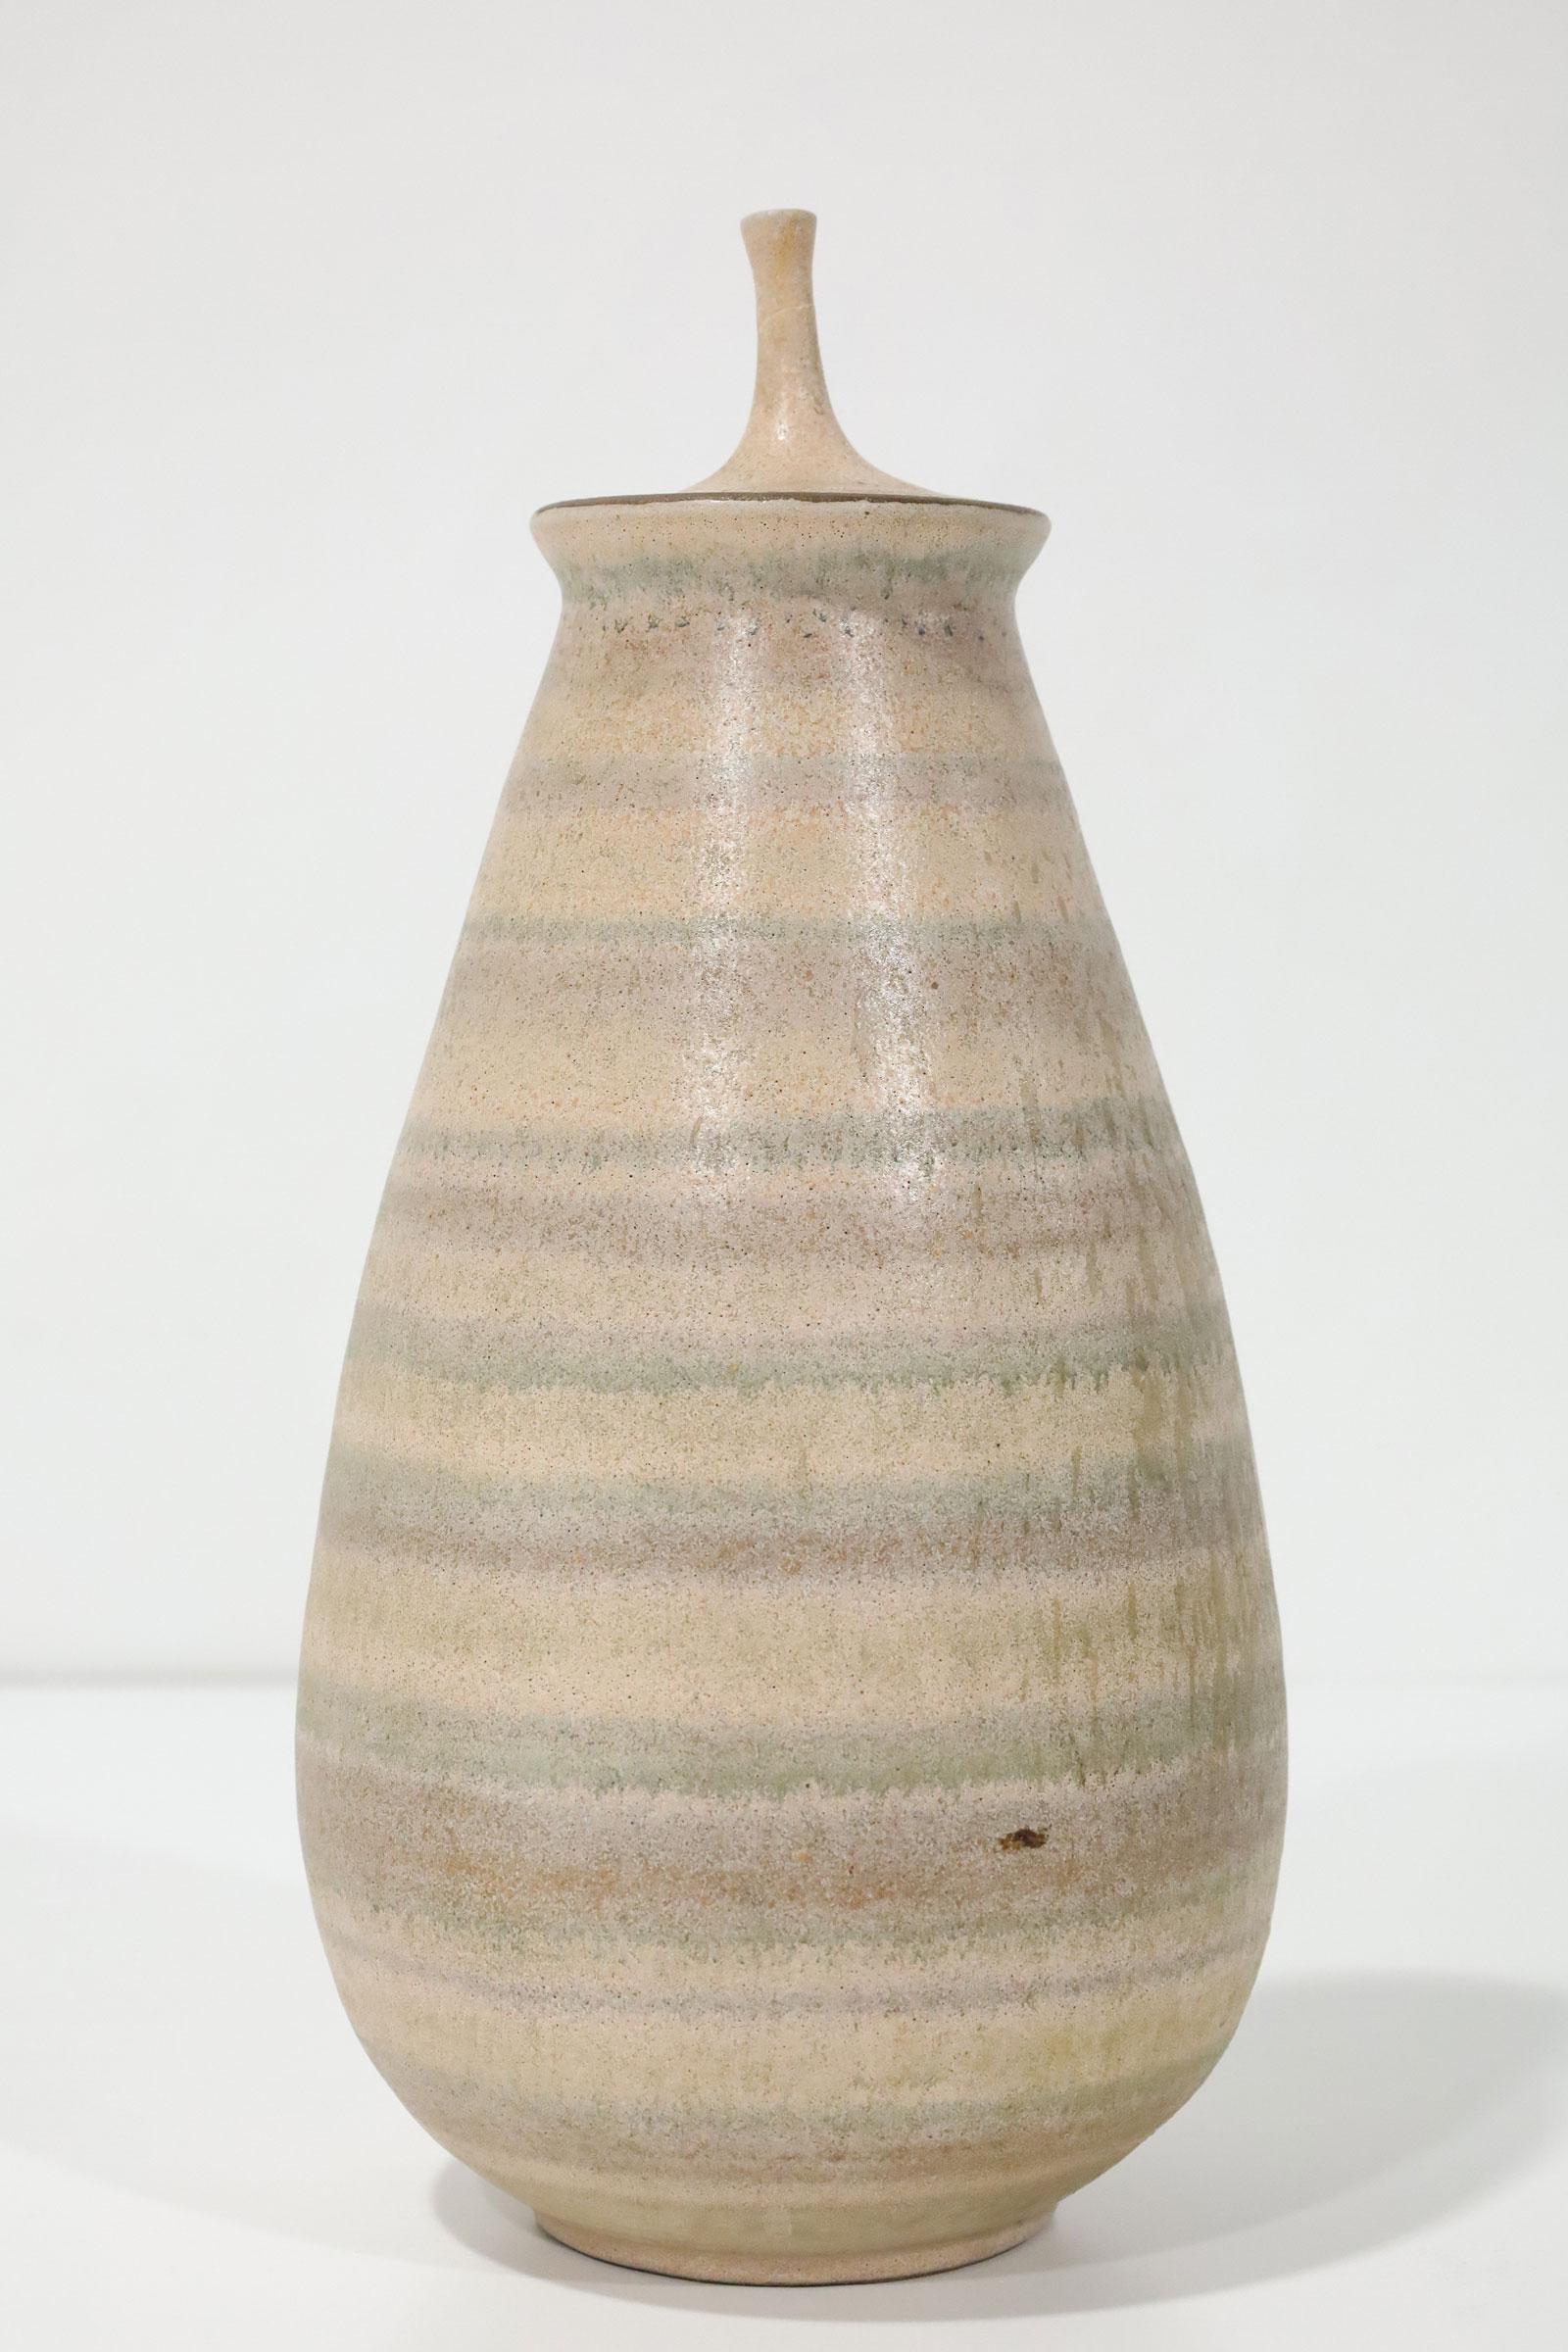 Clyde Burt Ceramic Vase with Lid For Sale 3